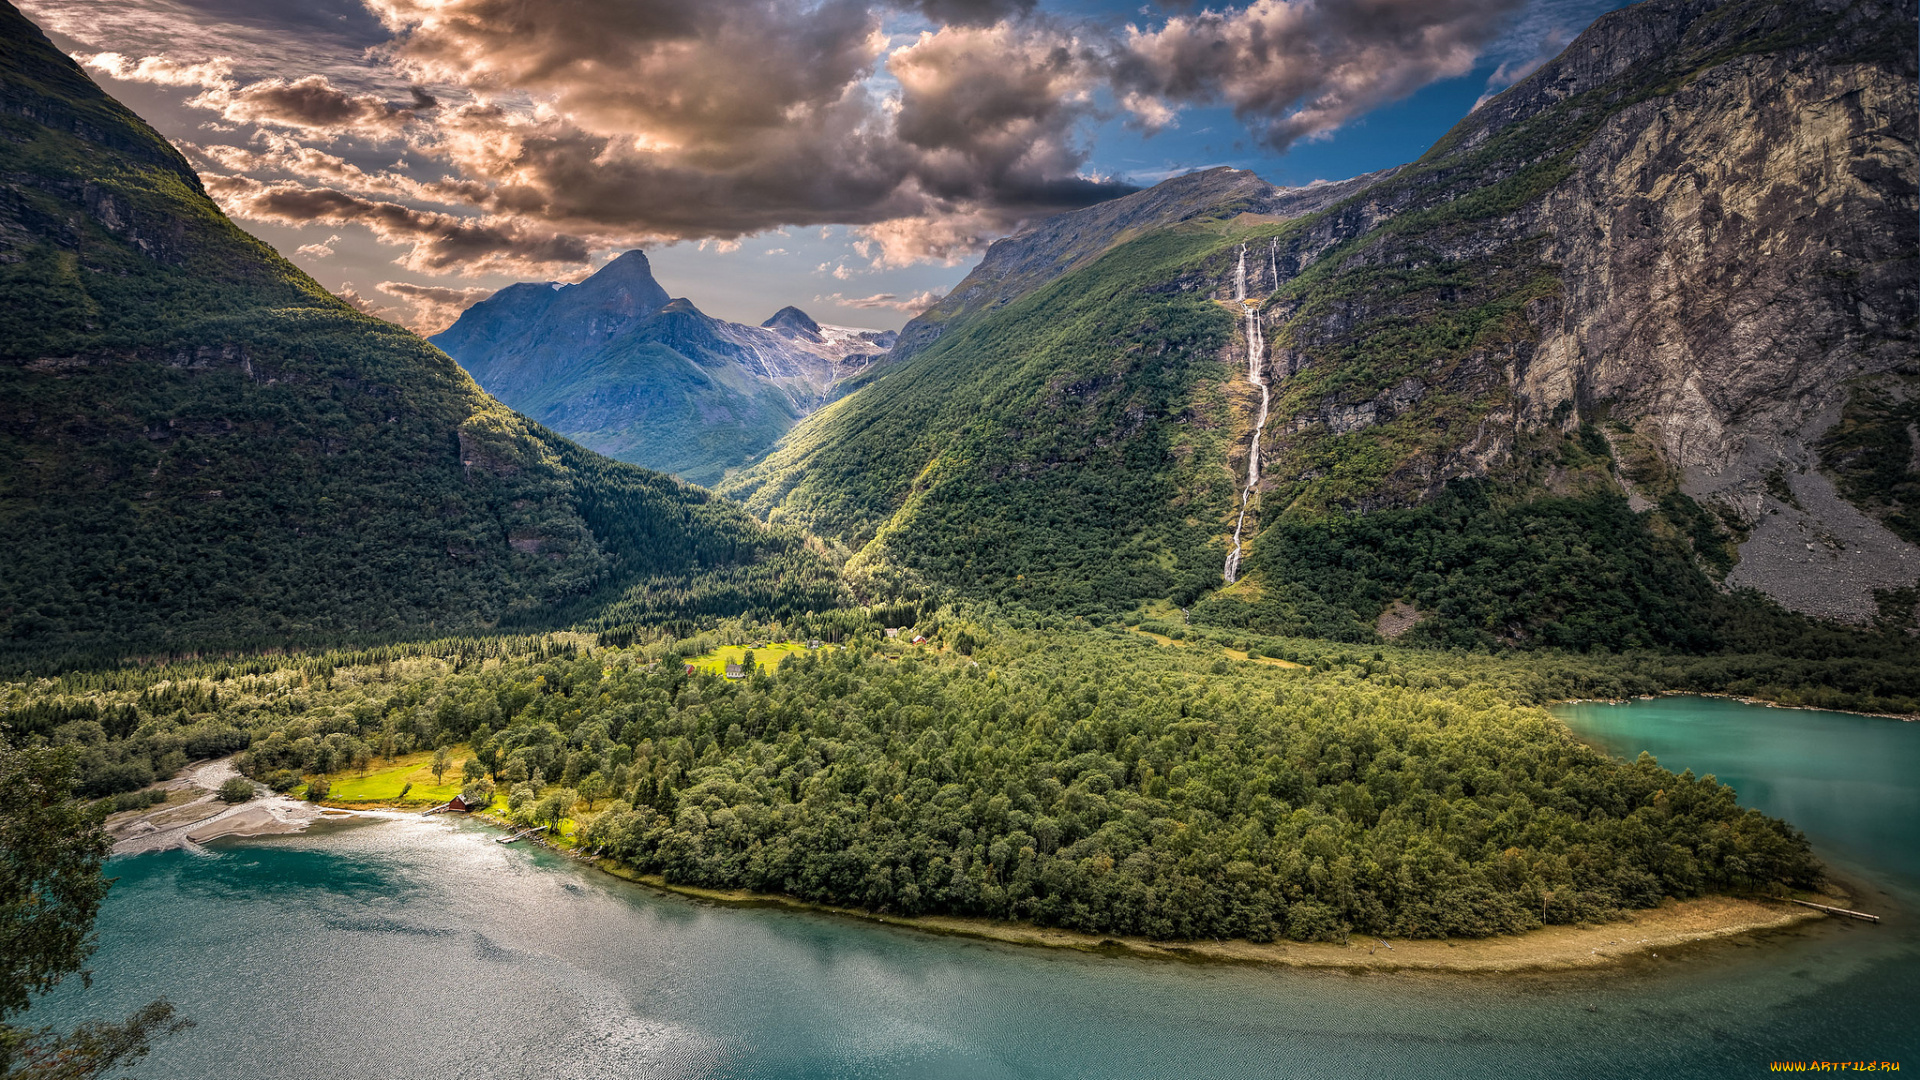 природа, реки, озера, озеро, облака, согн-ог-фьюране, викaн, norway, sogn, og, fjordane, vikane, панорама, горы, долина, норвегия